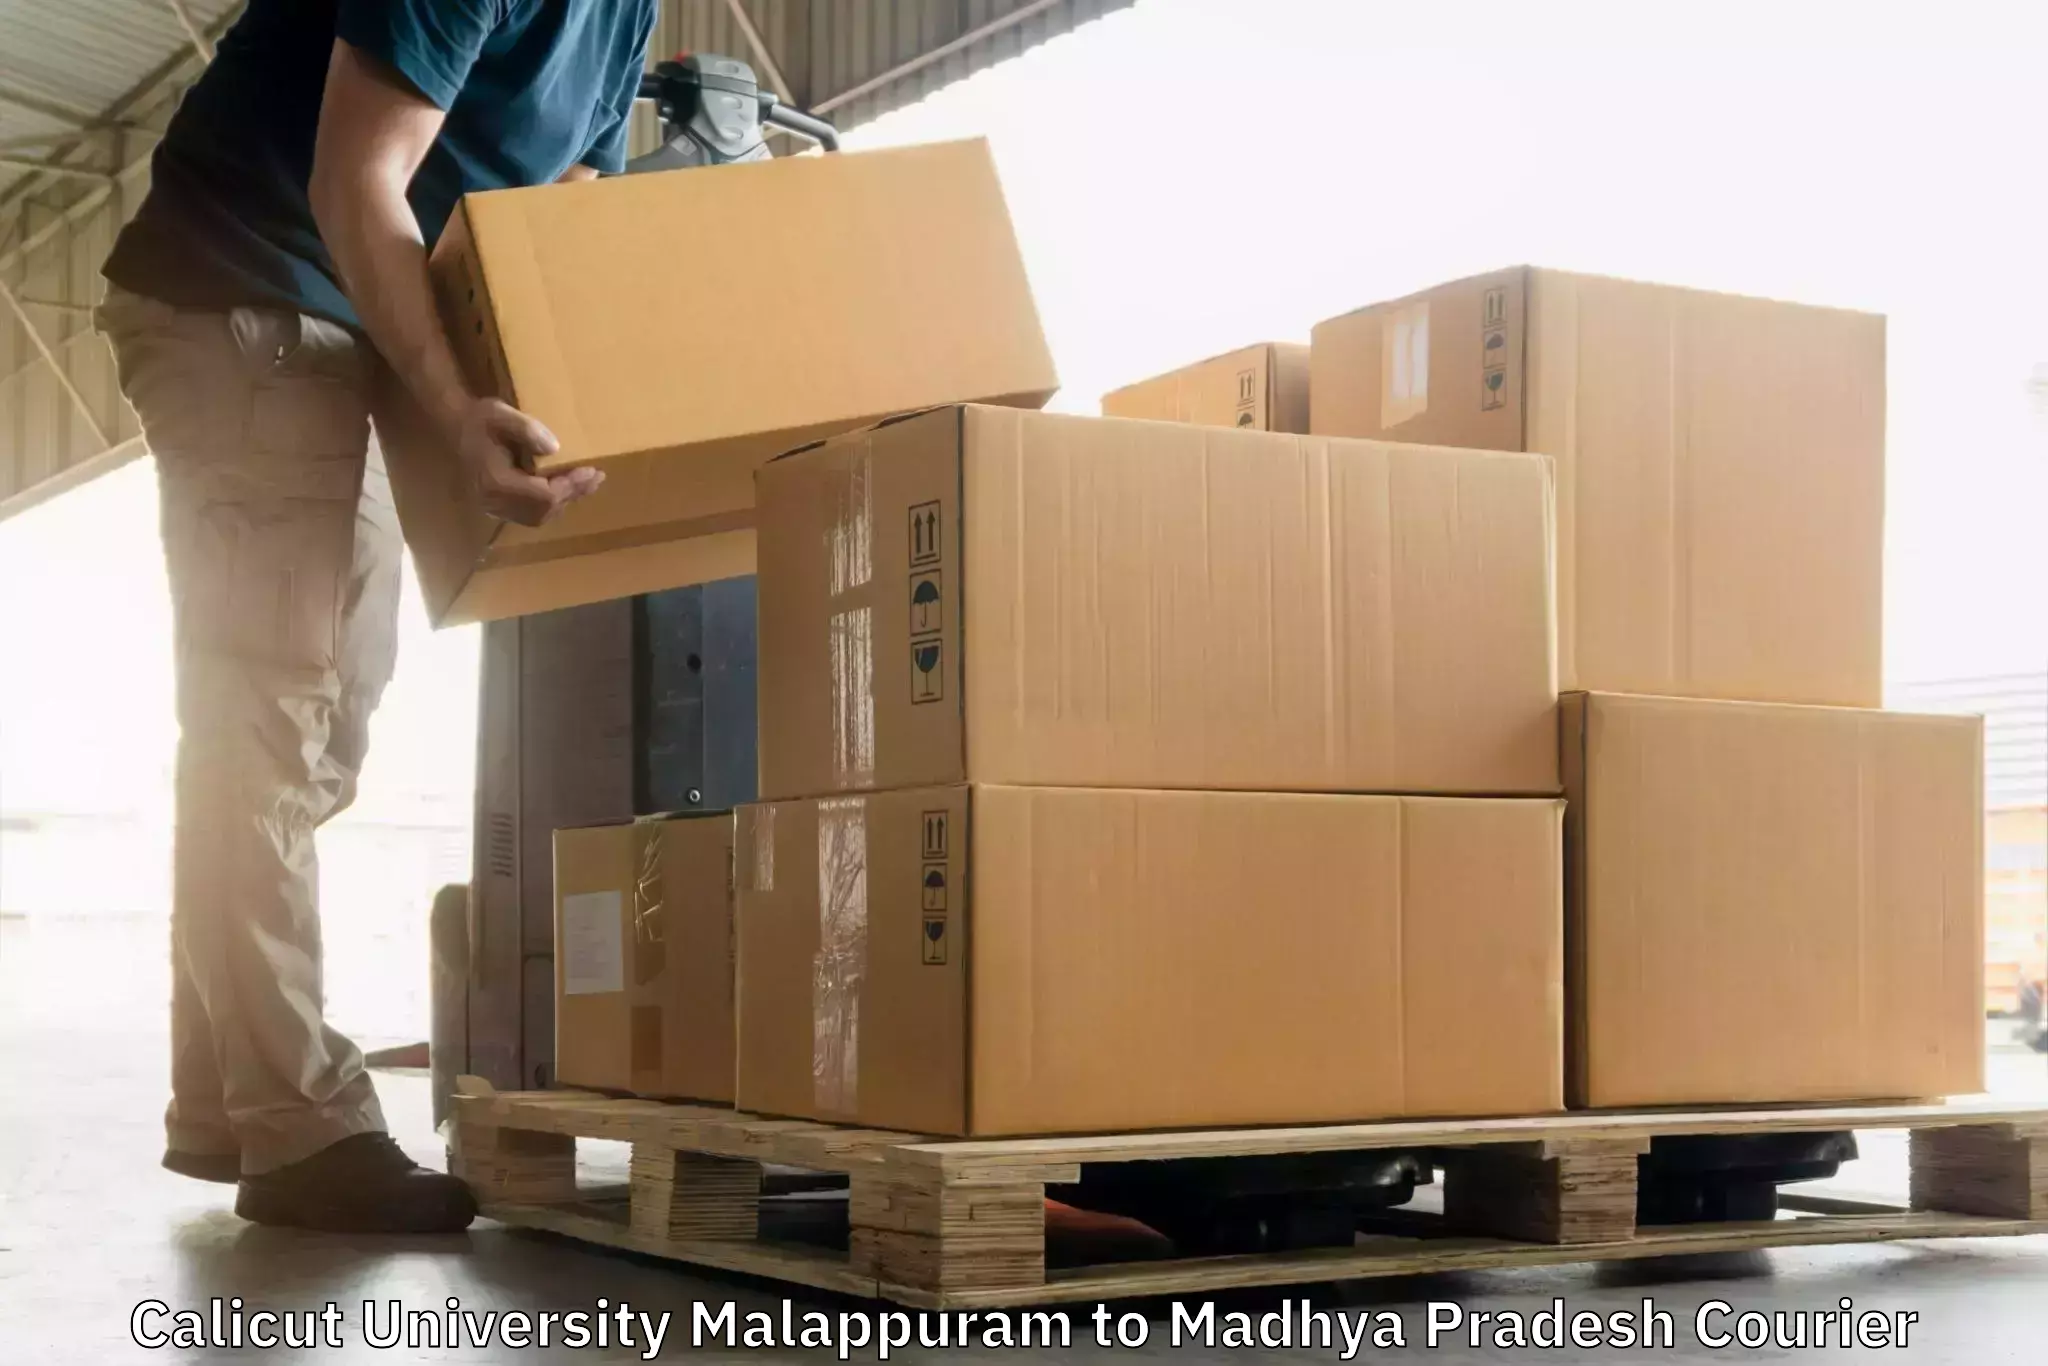 Quick courier services Calicut University Malappuram to Mundi